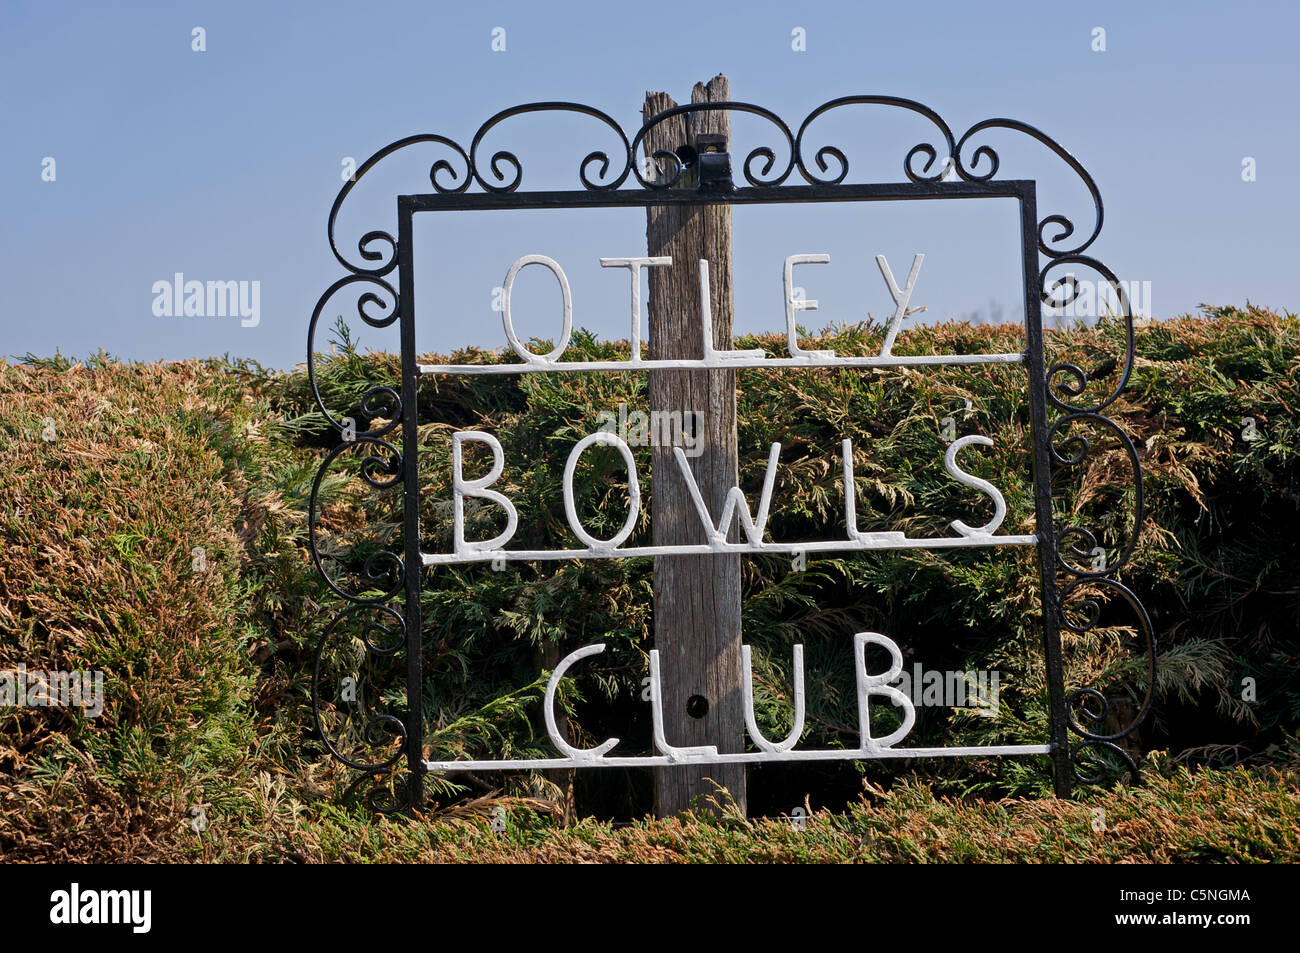 Otley bowls club sign, Suffolk, UK. Stock Photo